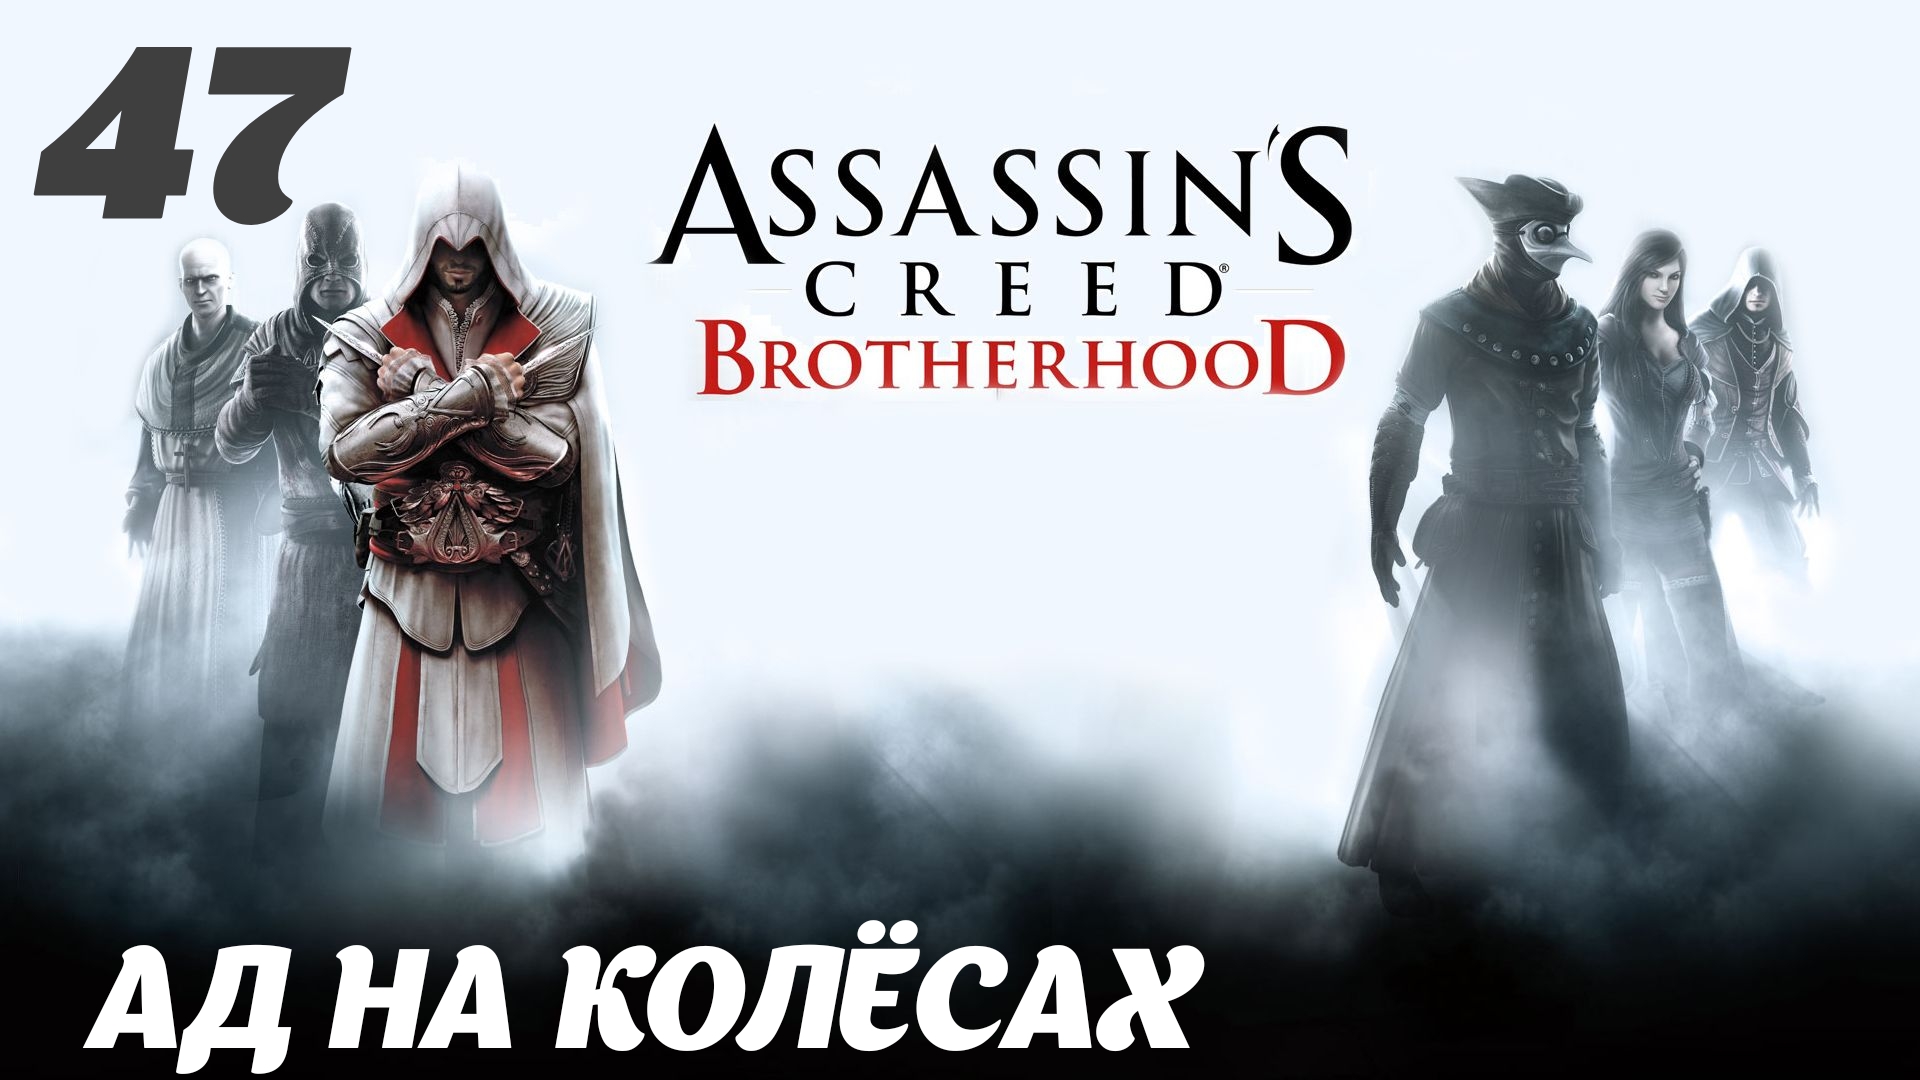 Assassins creed brotherhood на steam фото 85